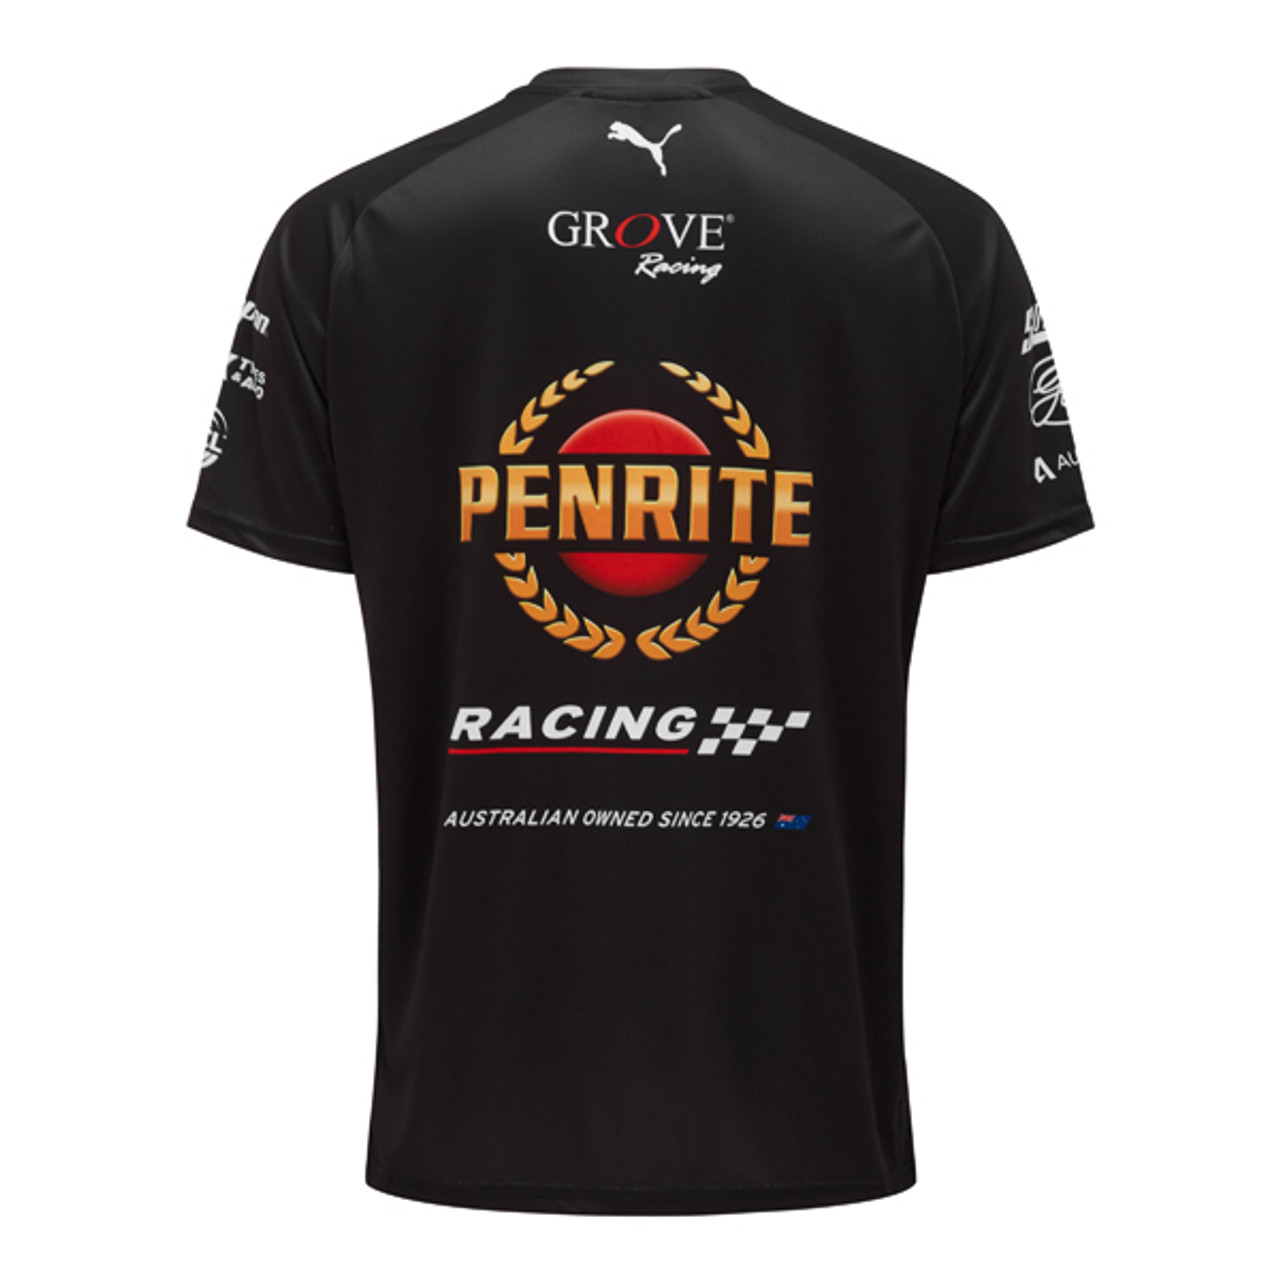 Sale - Penrite Grove Racing